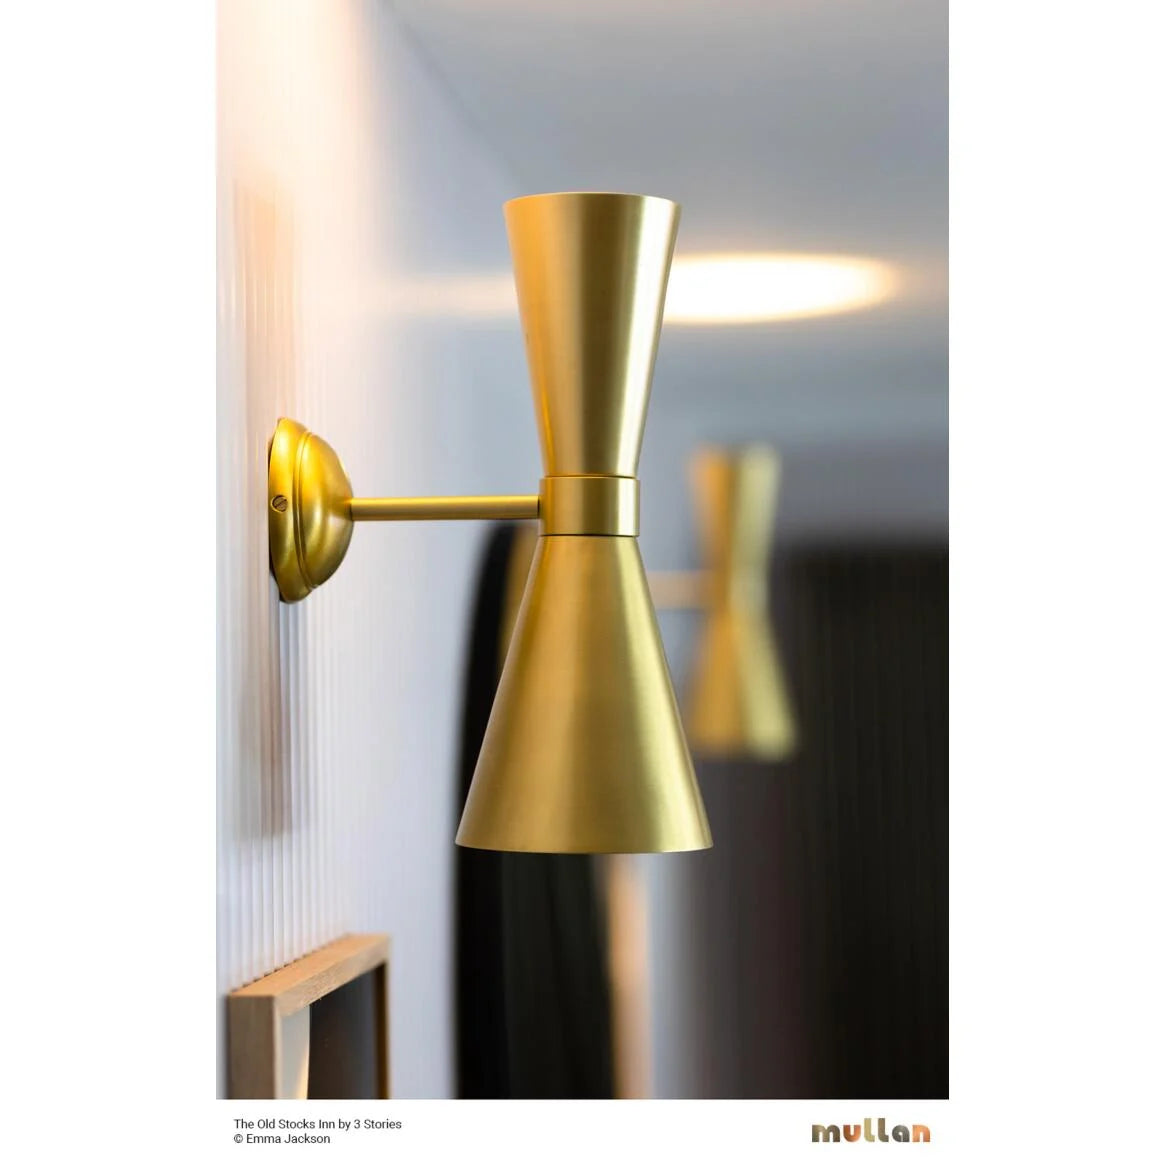 Amias Mid-Century Double Brass Cone Wall Light